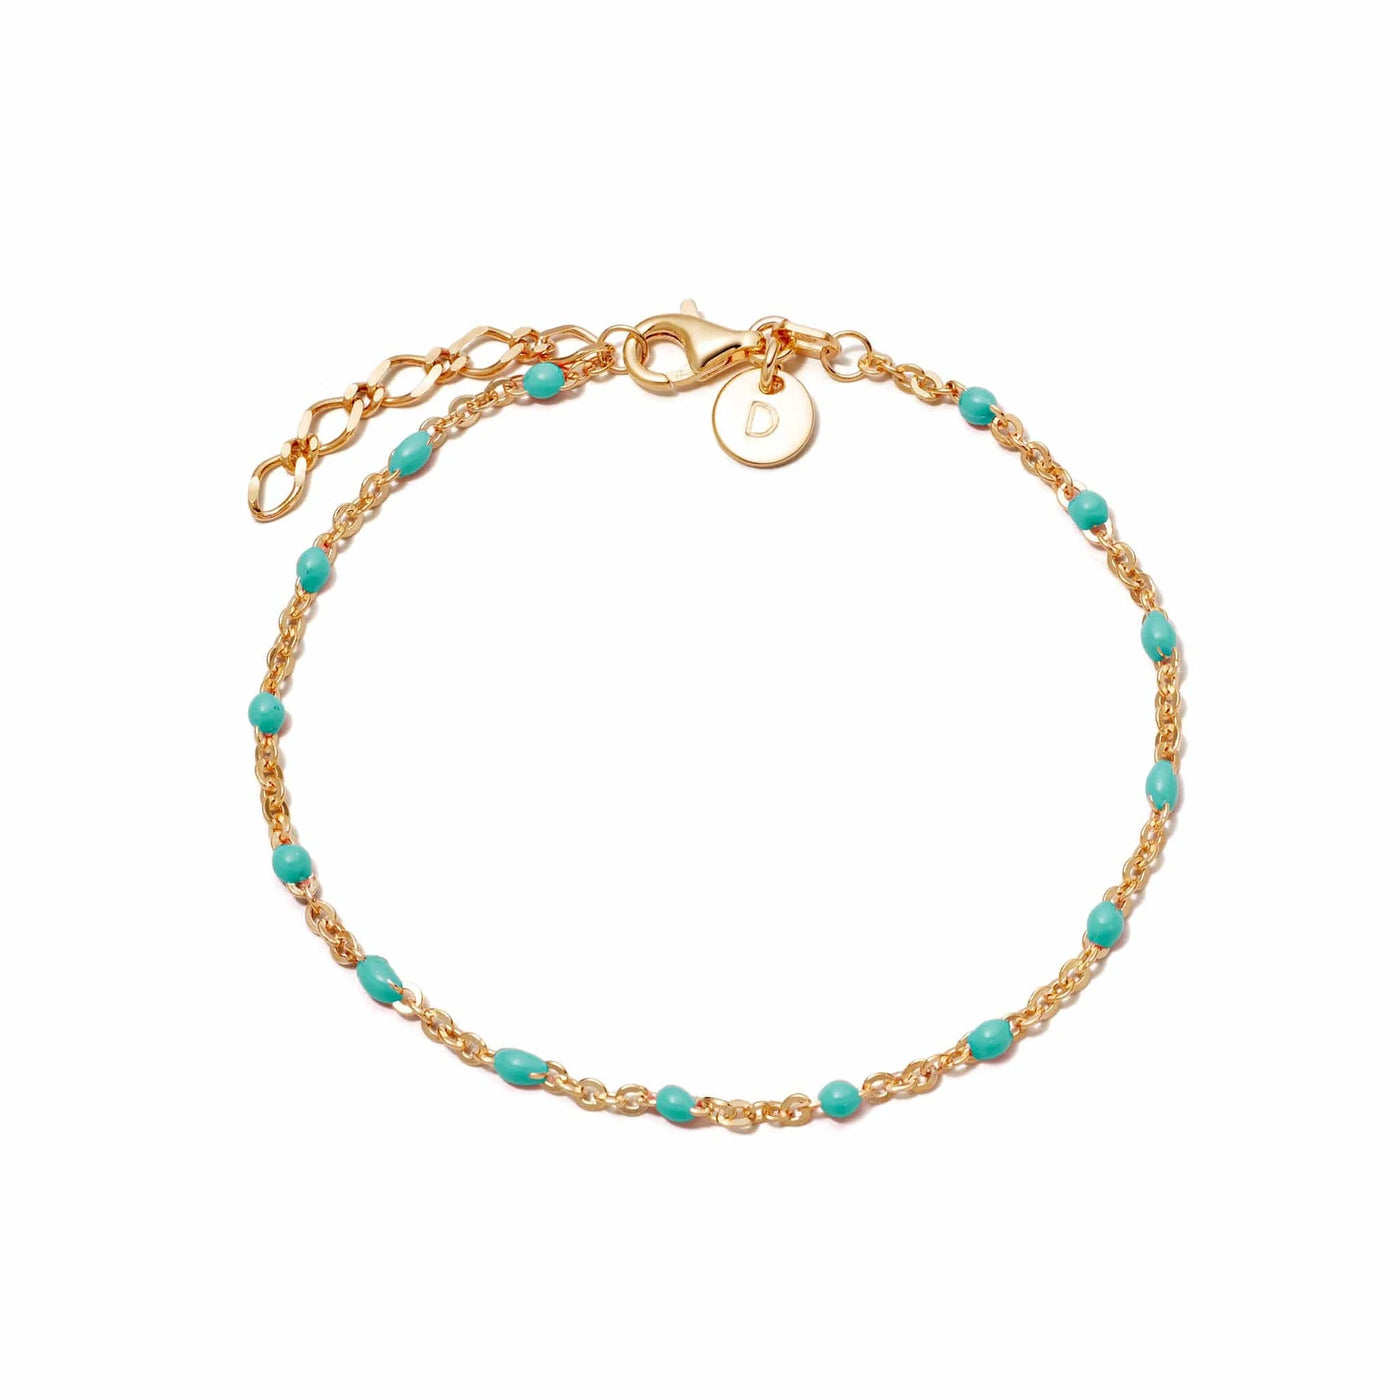 Daisy London Treasures Turquoise Beaded Bracelet, Gold